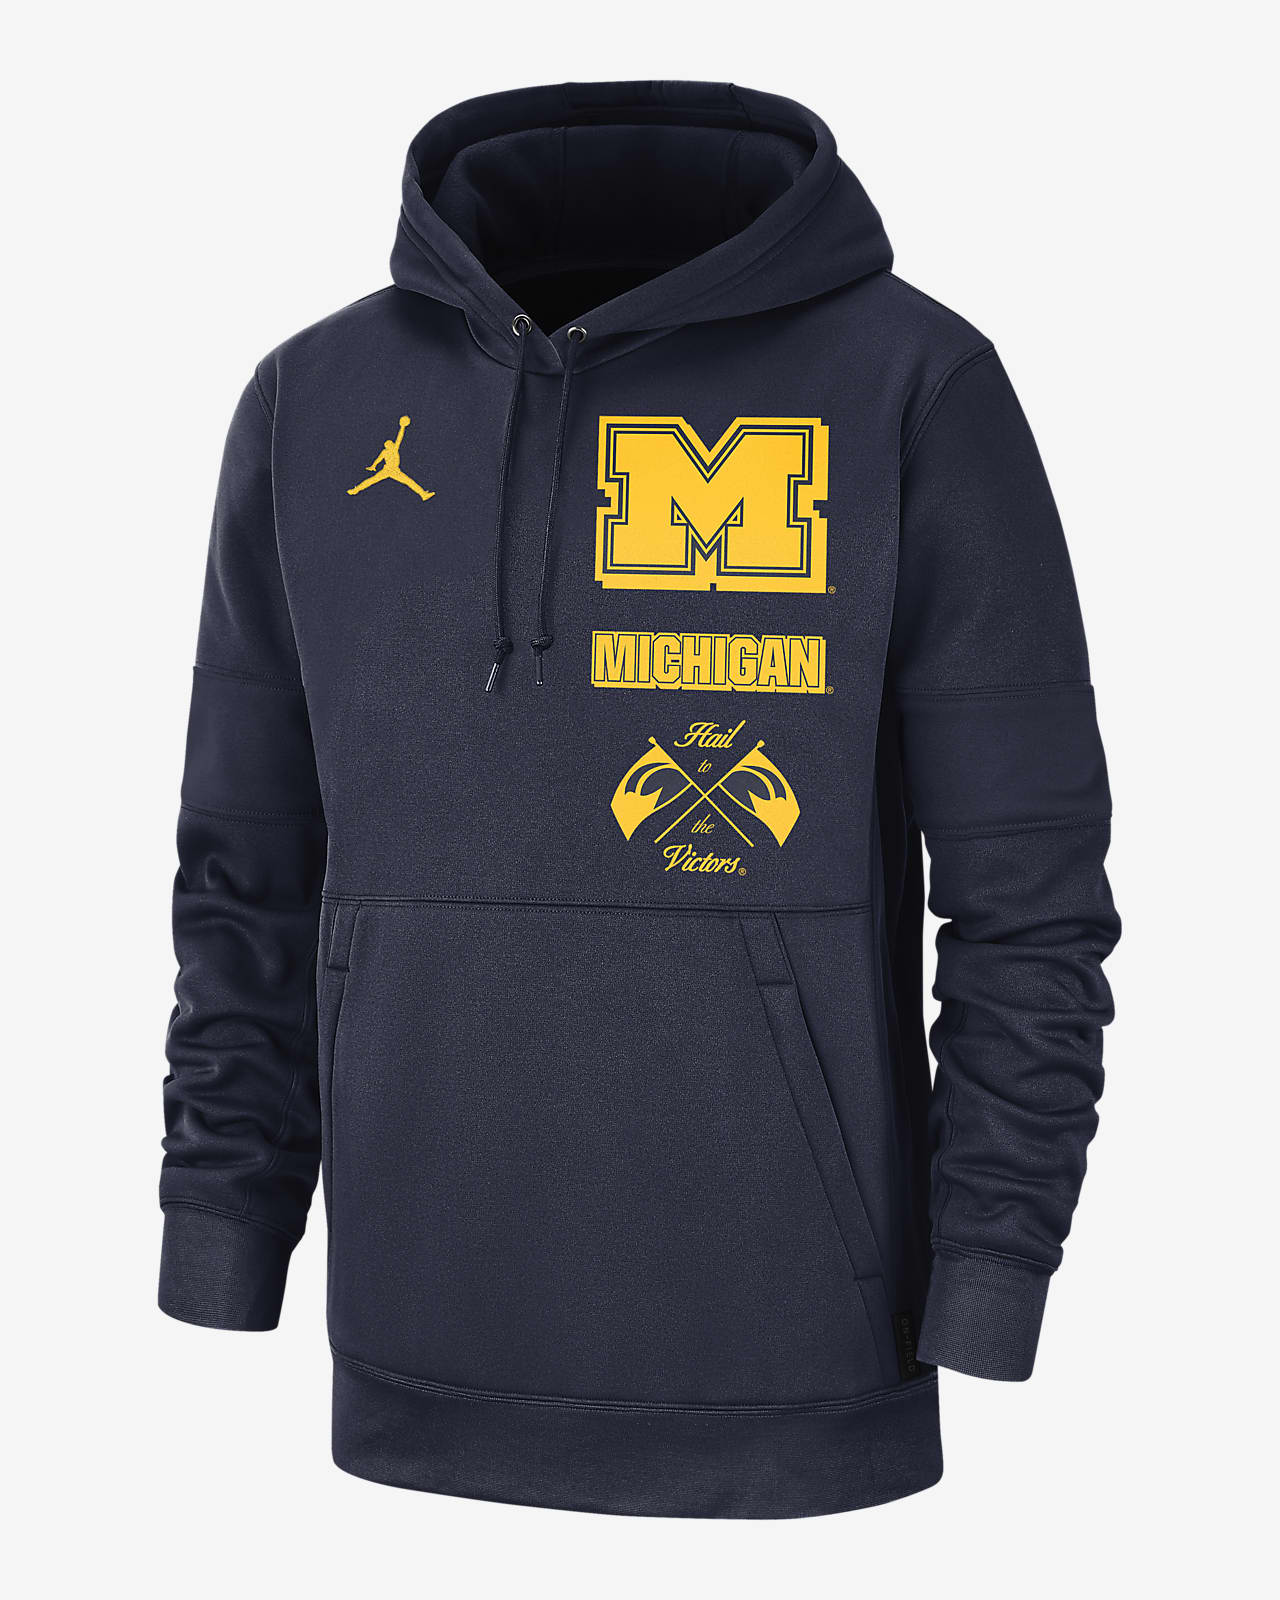 nike college therma hoodie